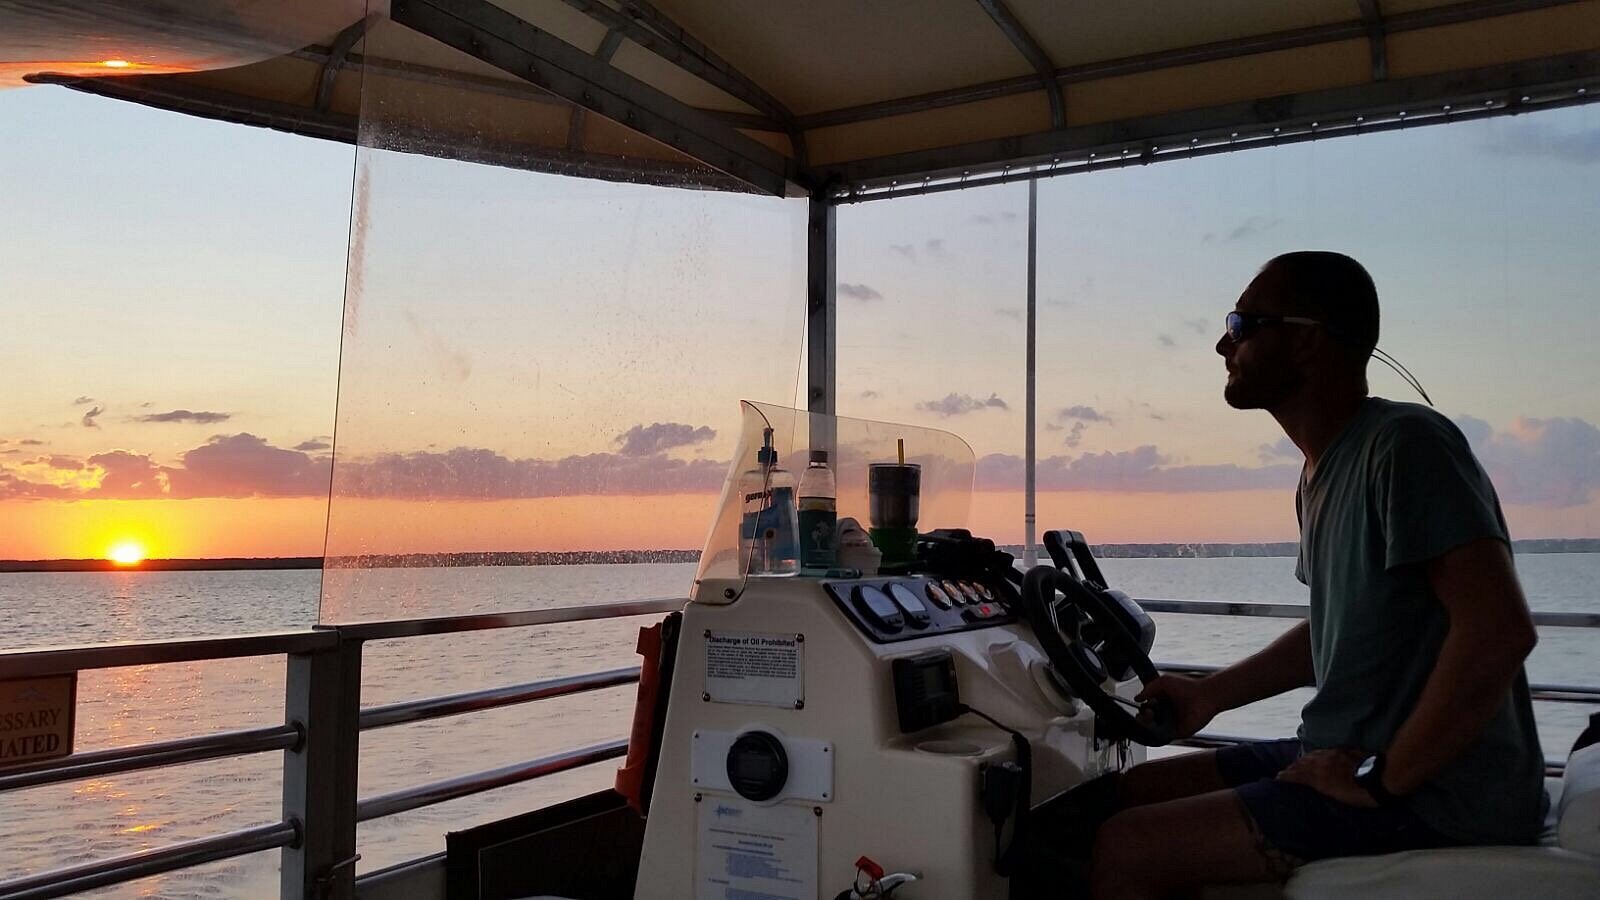 sunset boat trip